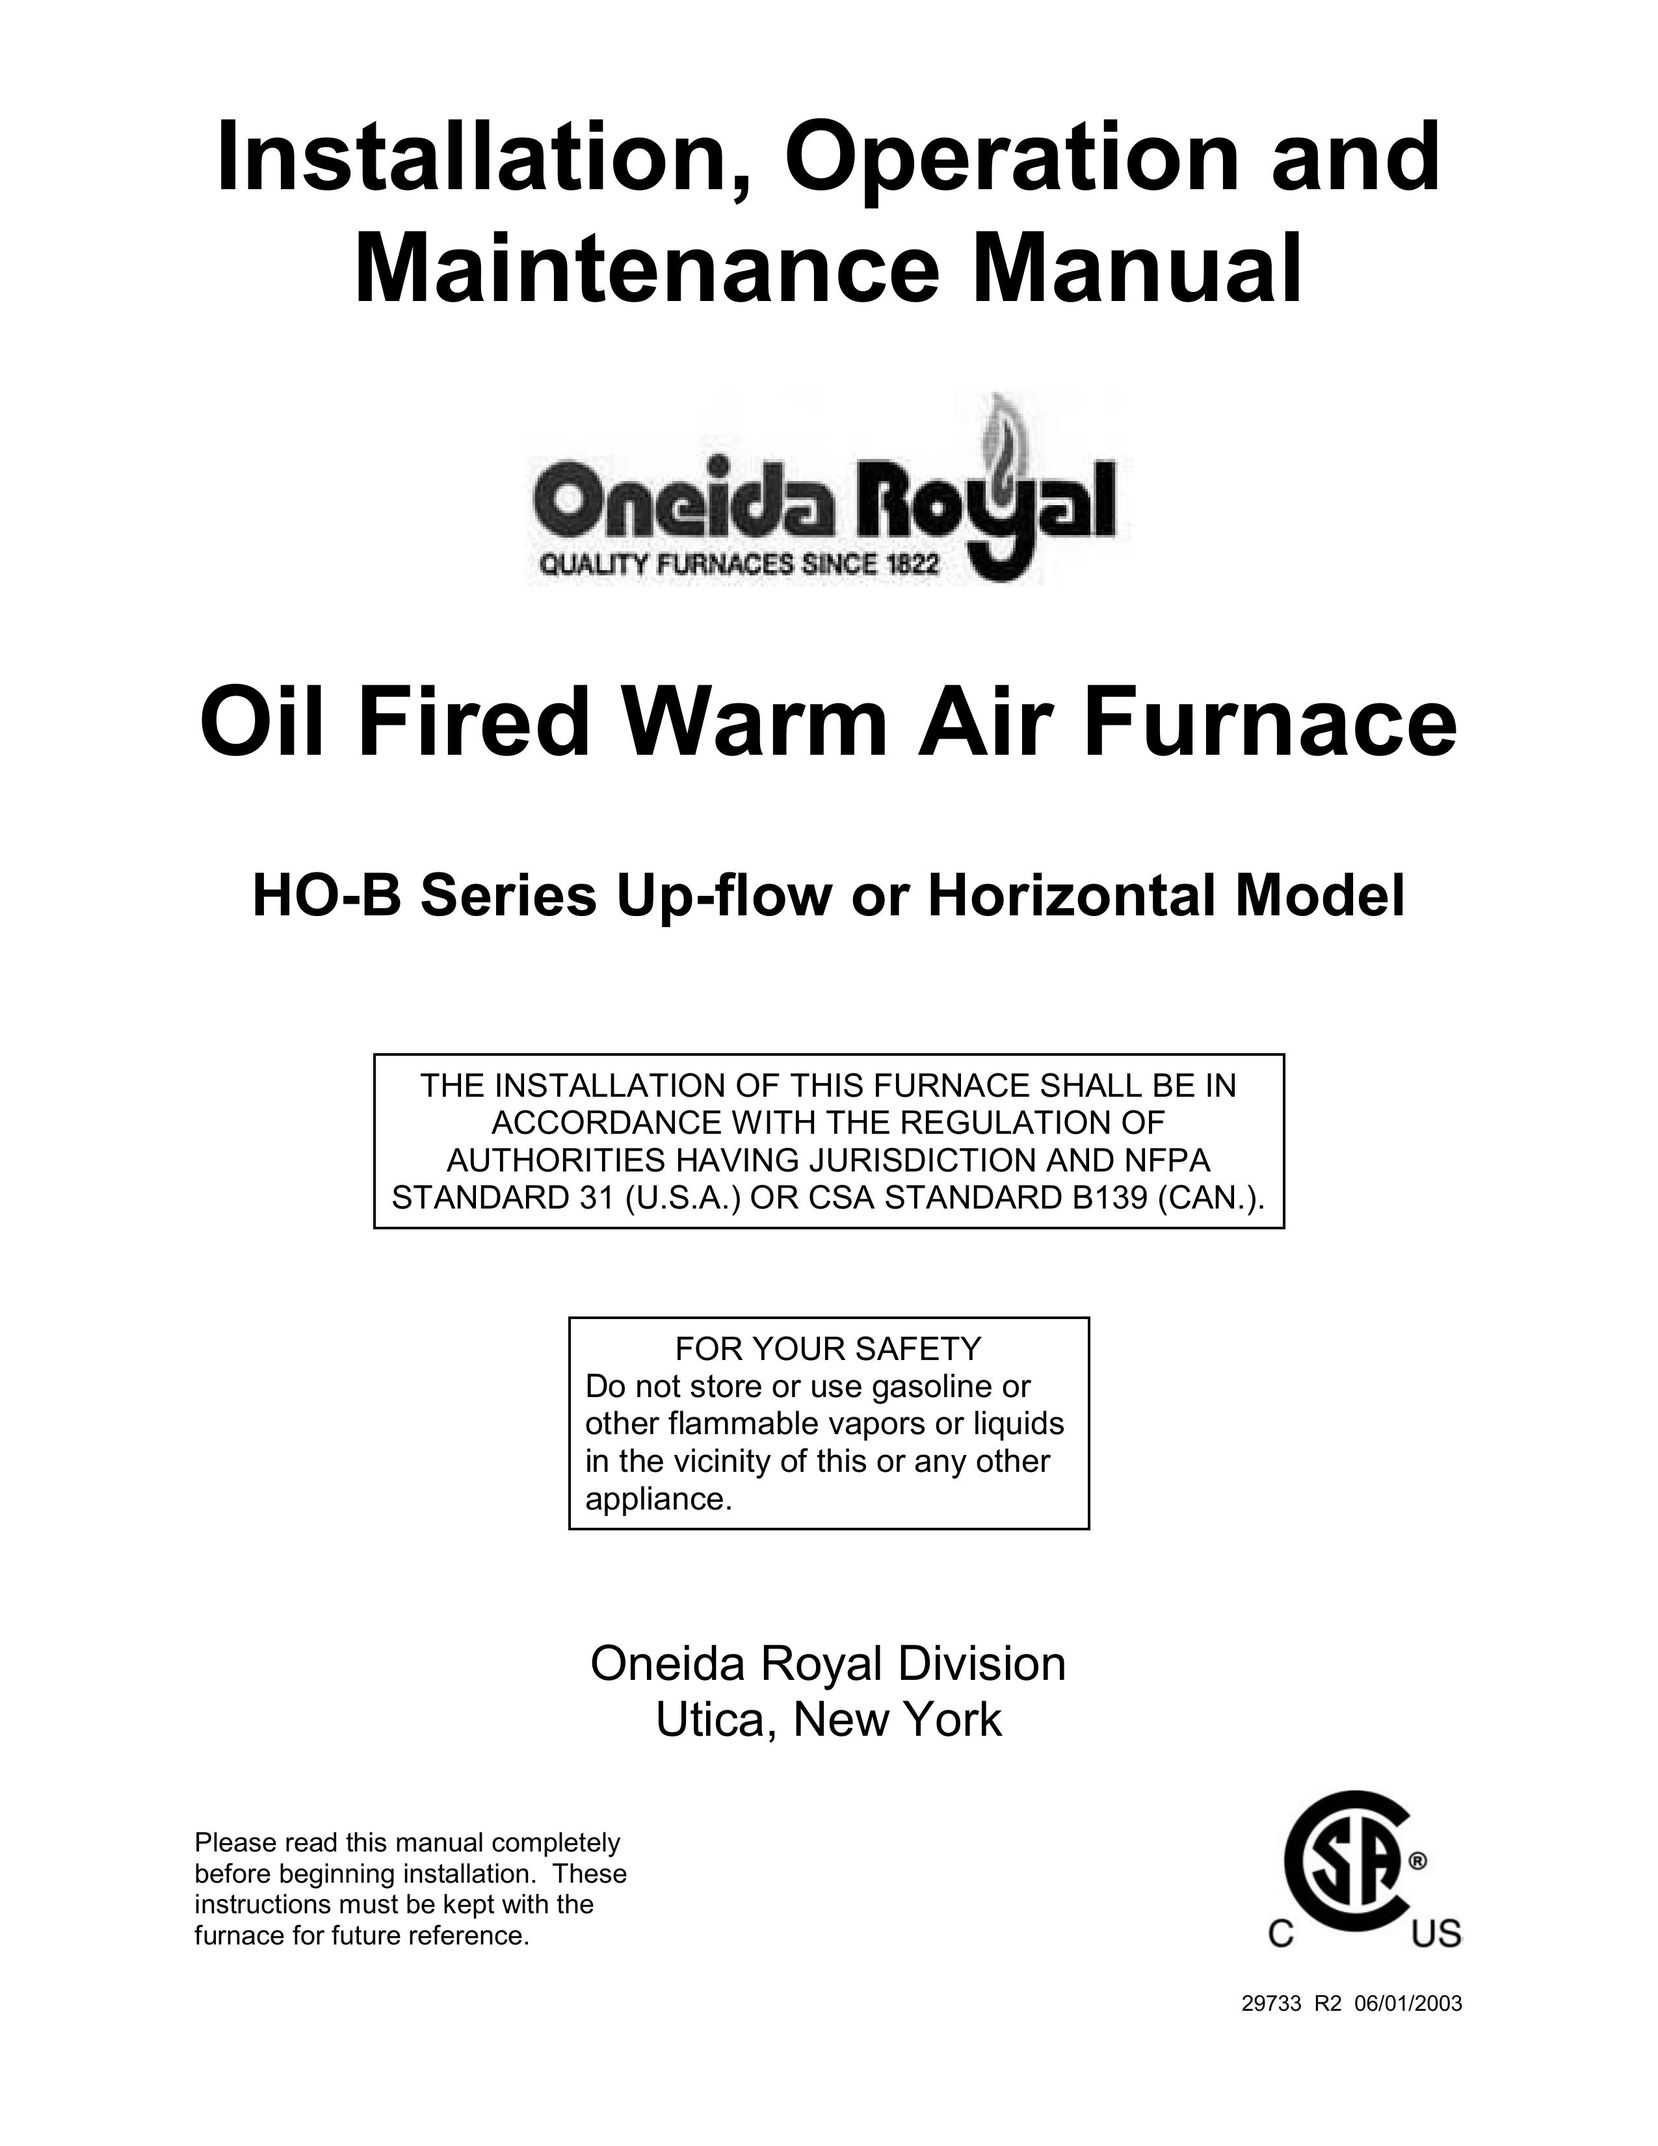 Royal Appliance Air Furnace Furnace User Manual